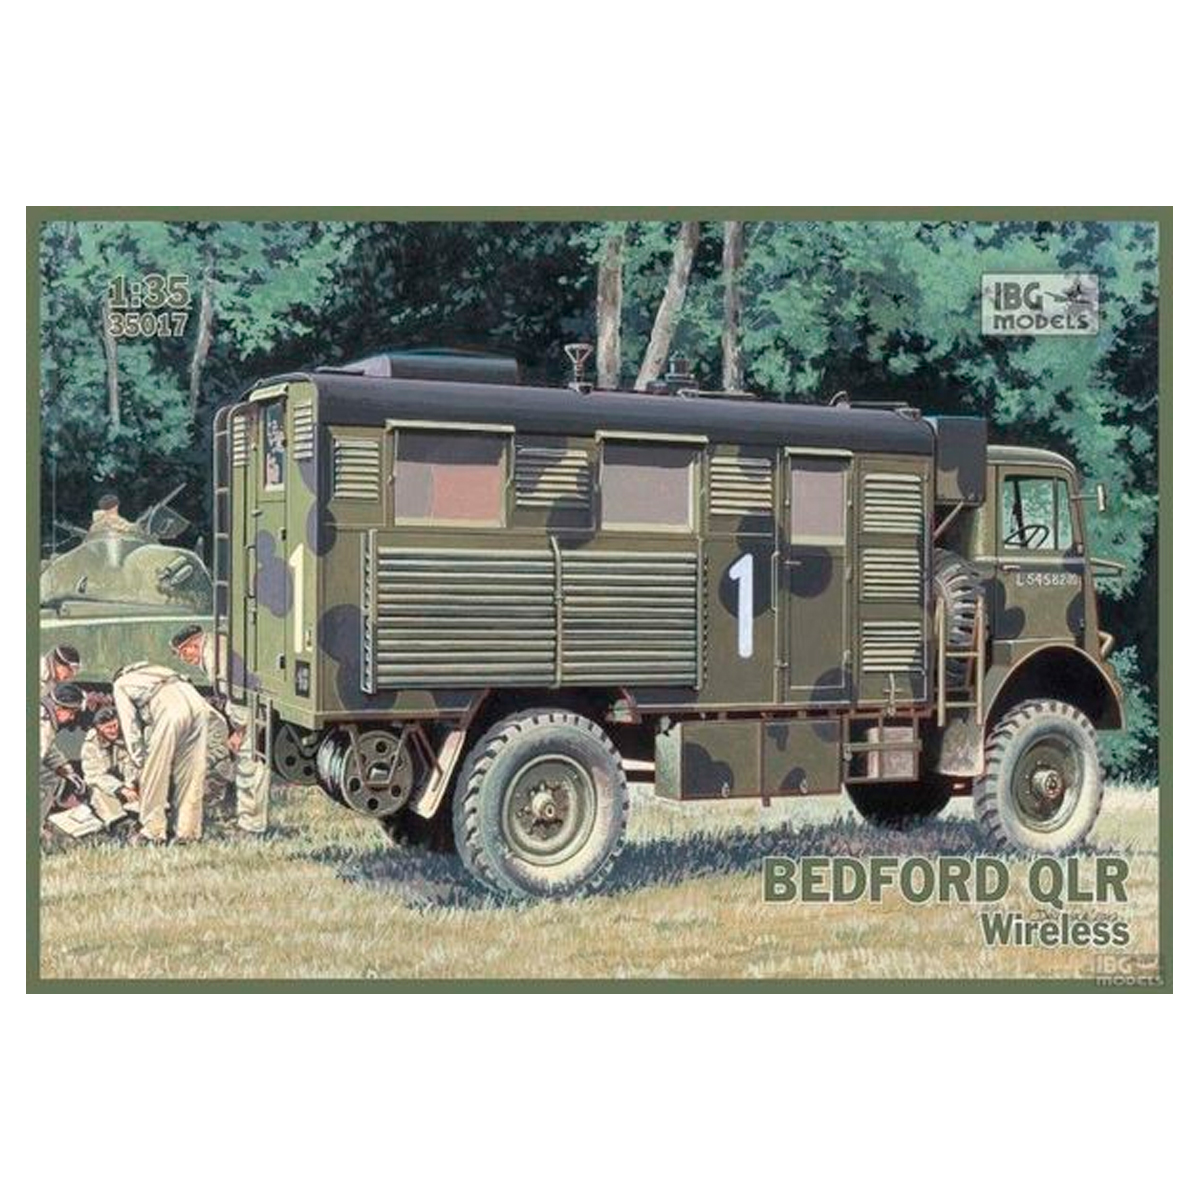 Bedford QLR Wireless 1/35